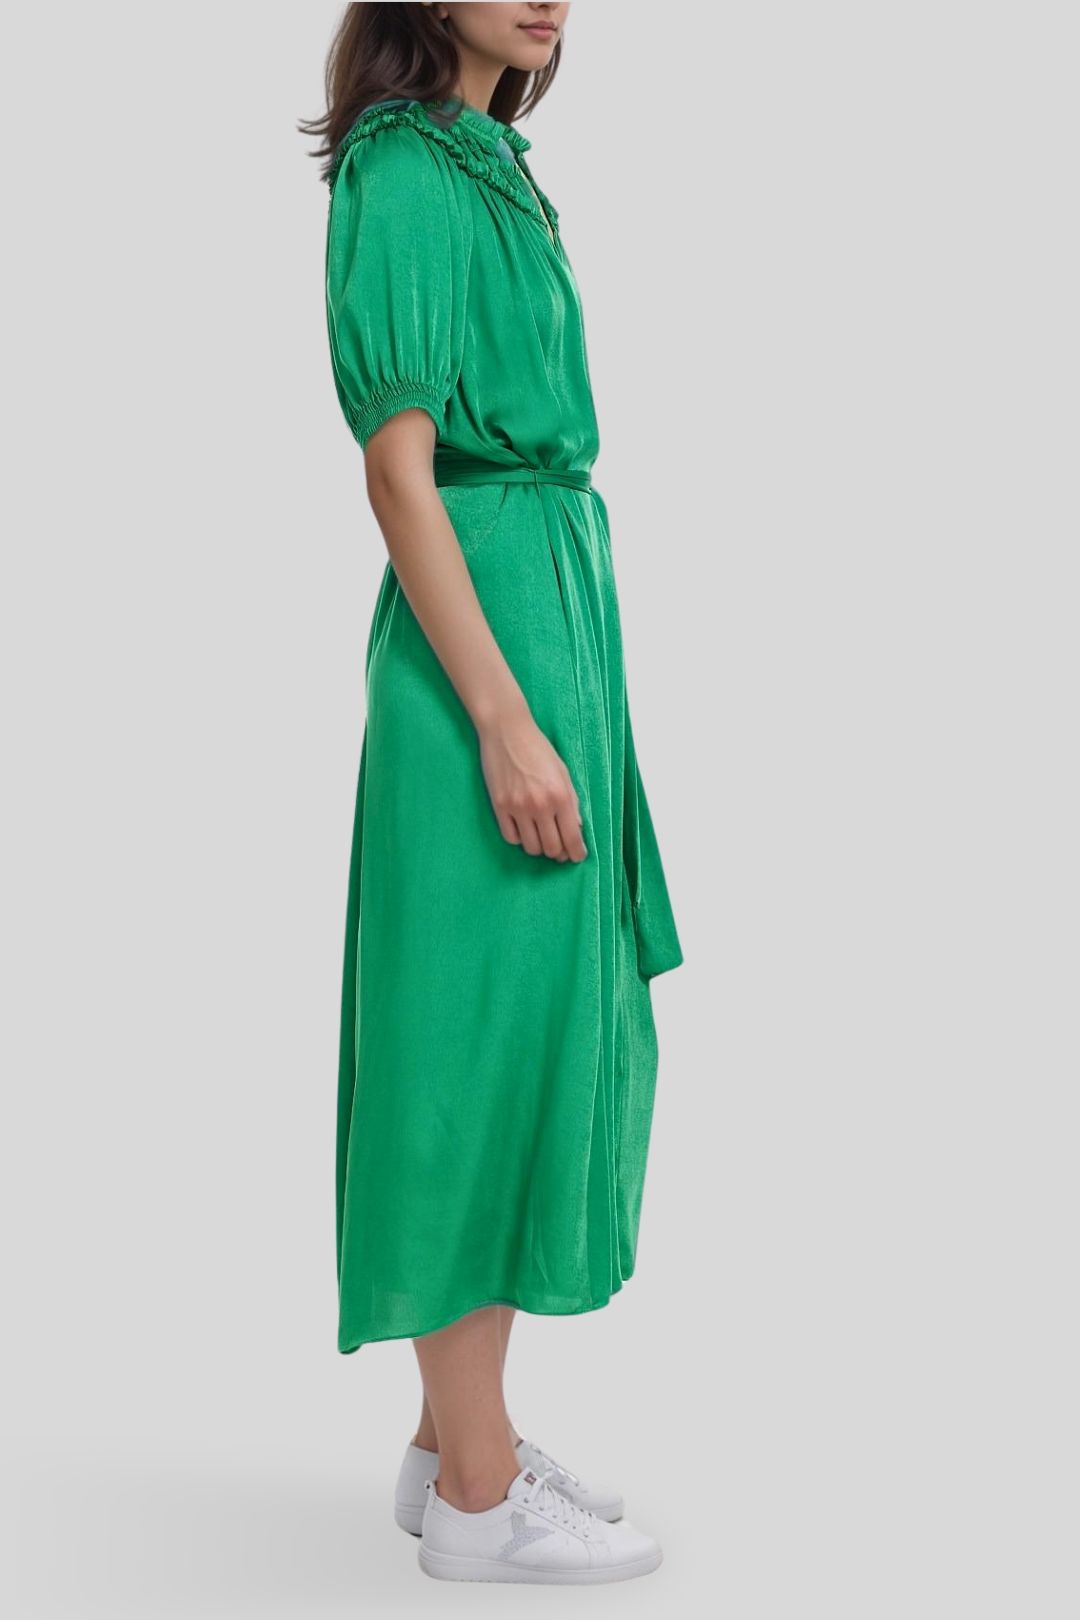 Brave and True Bistro Dress Emerald